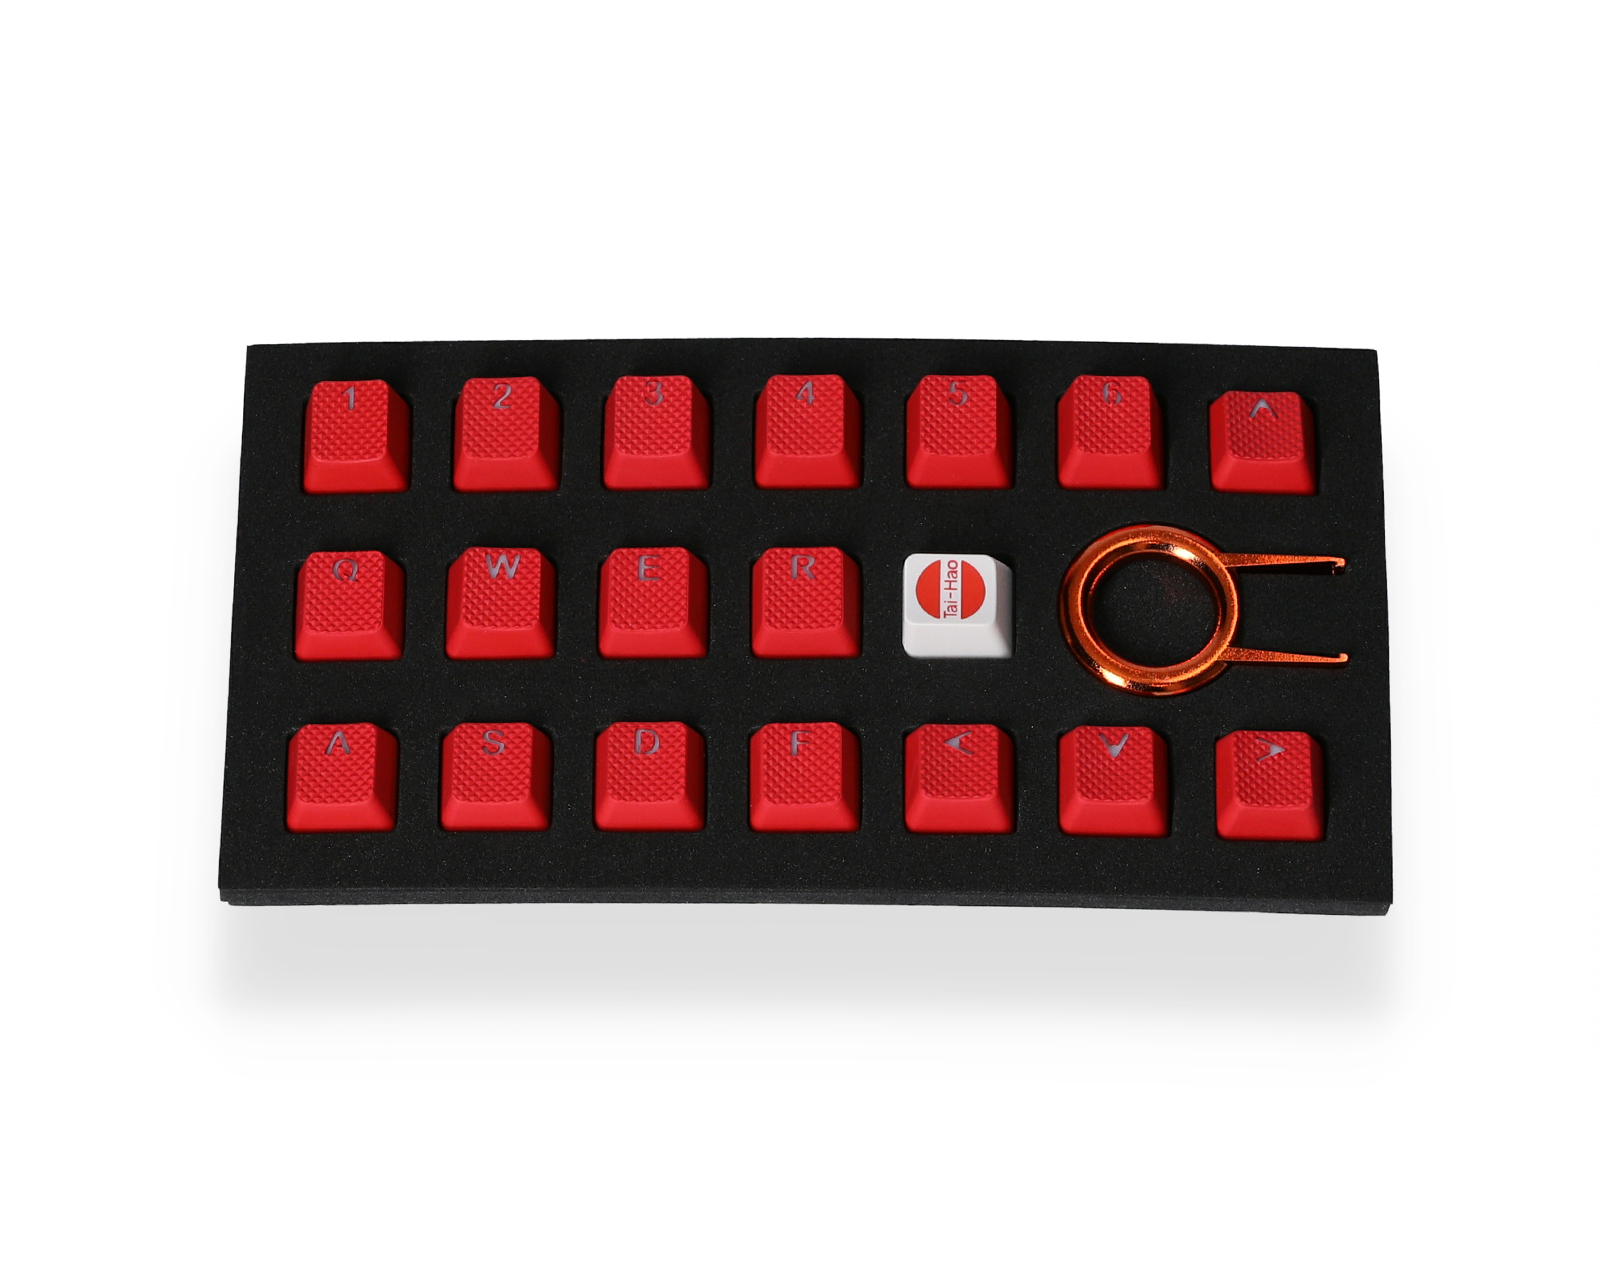 Buy Tai Hao 18 Key Rubber Double Shot Backlit Keycap Set Red At Maxgaming Com